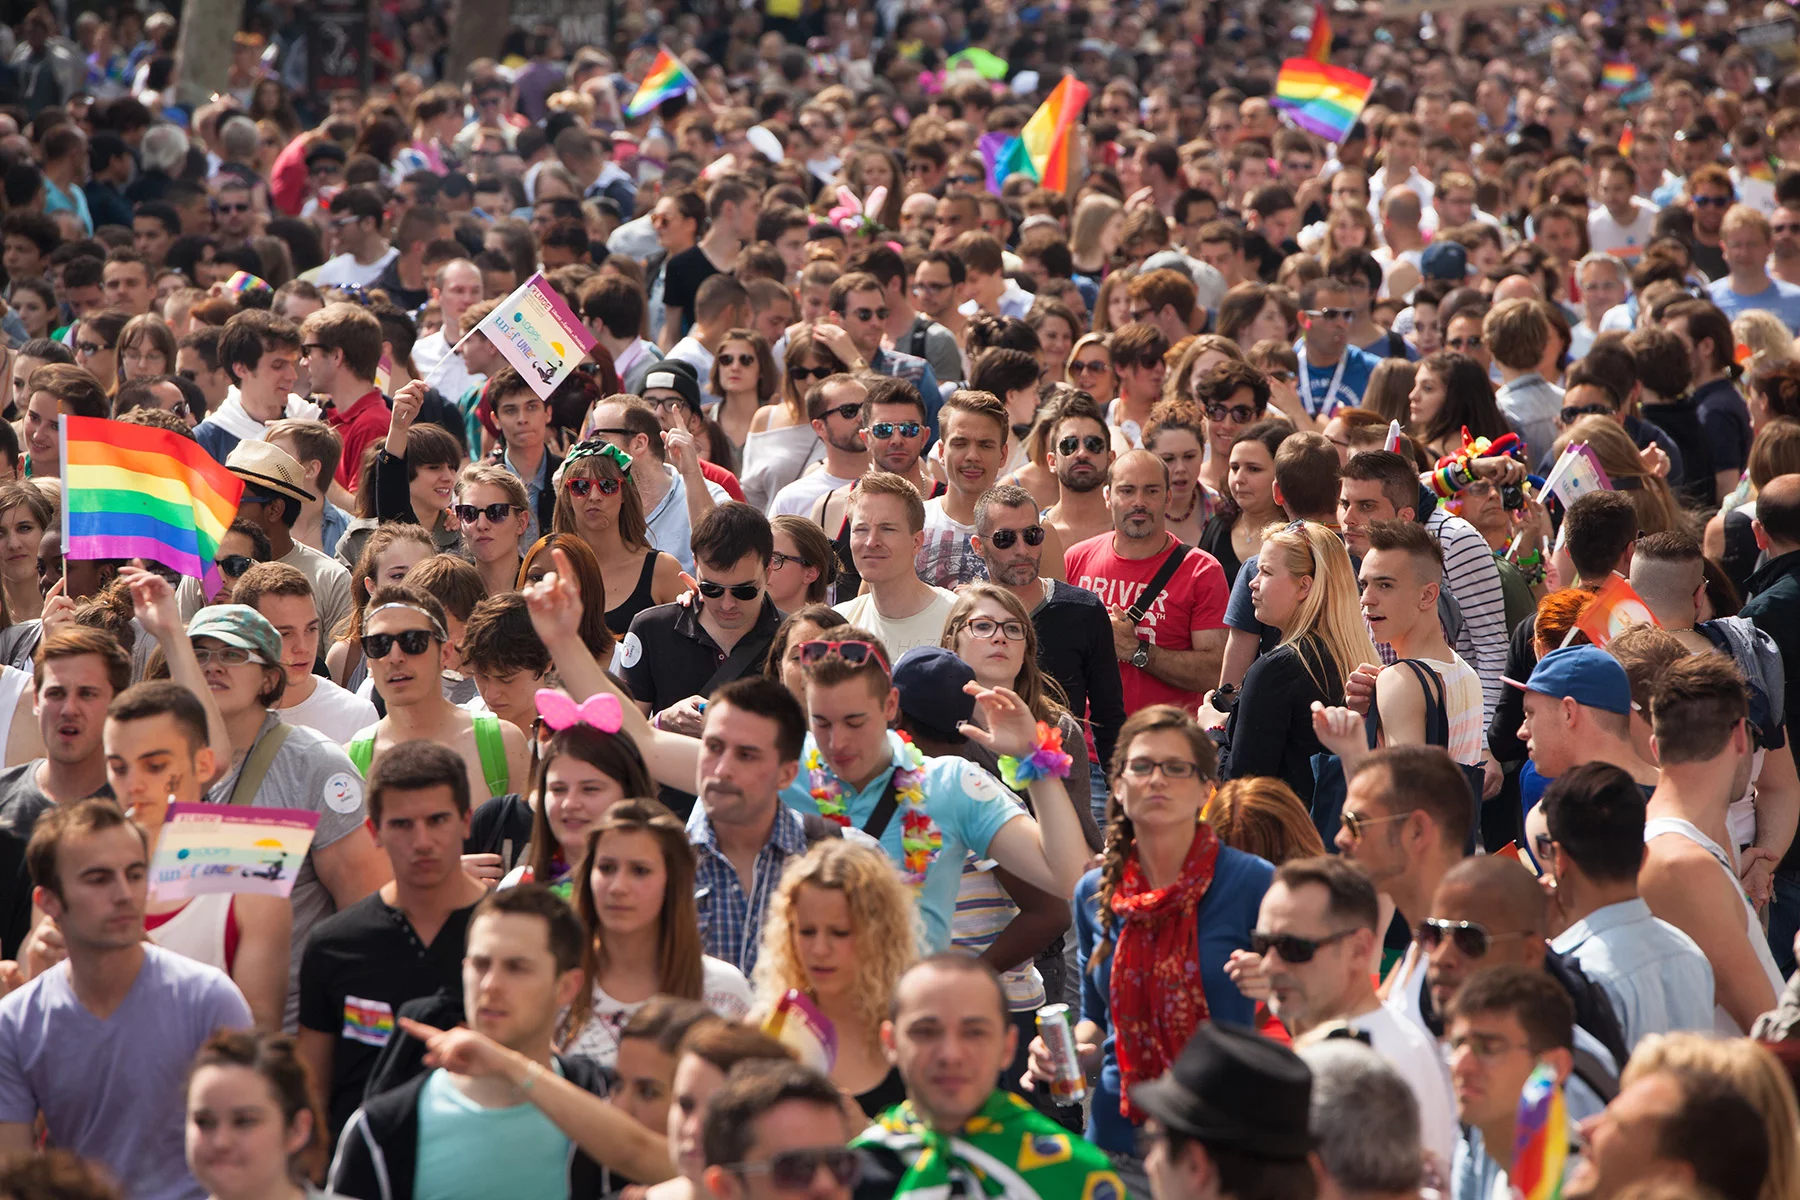 The crowd at the 2013 Paris Pride Parade